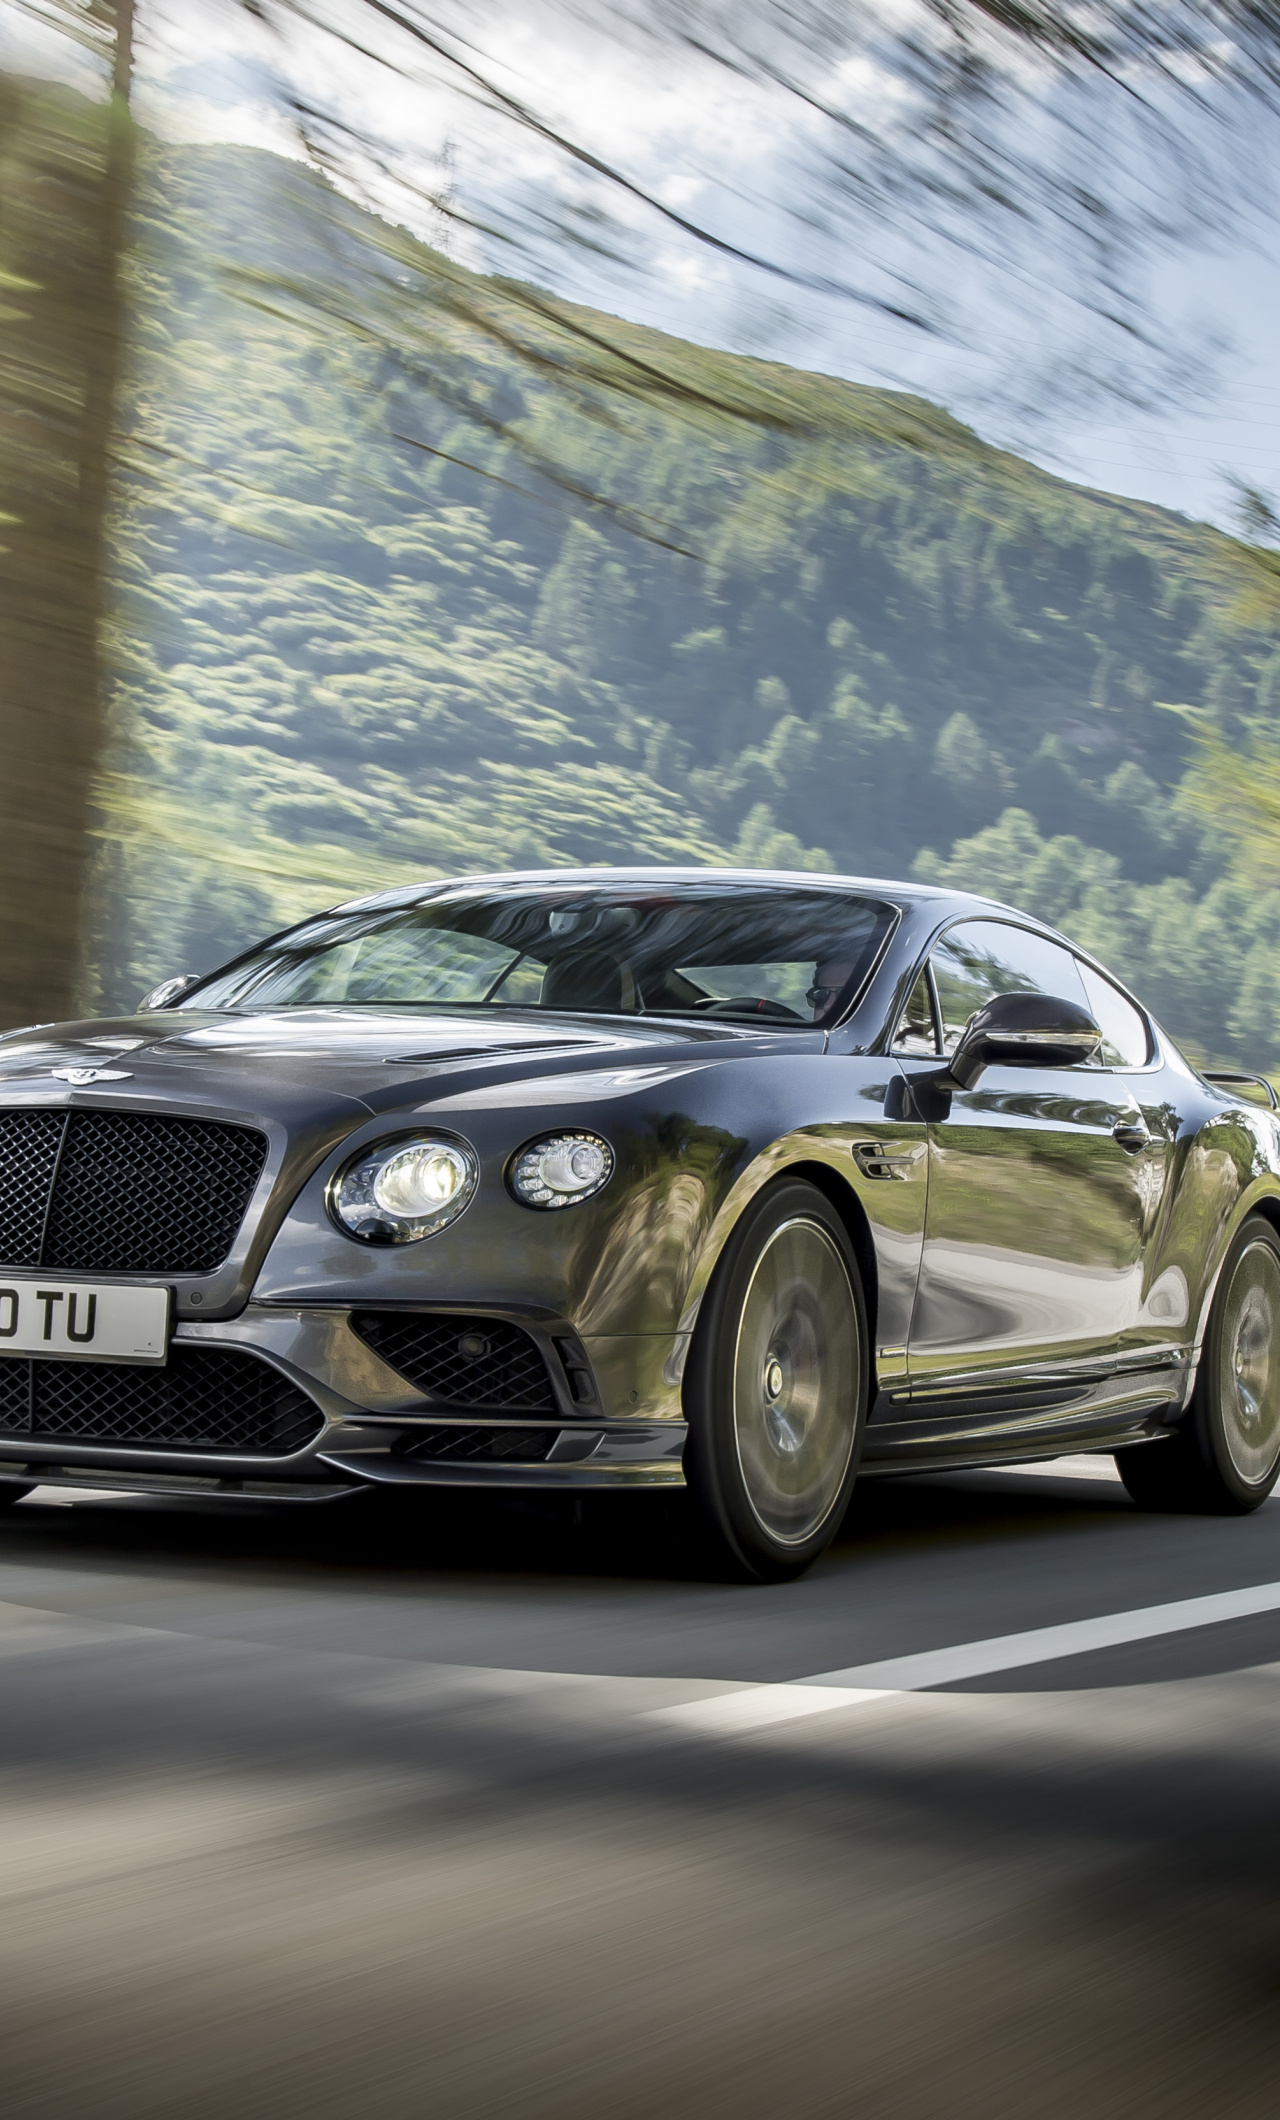 Download Bentley Continental GT, sports car, motion blur wallpaper, 1280x iPhone 6 Plus